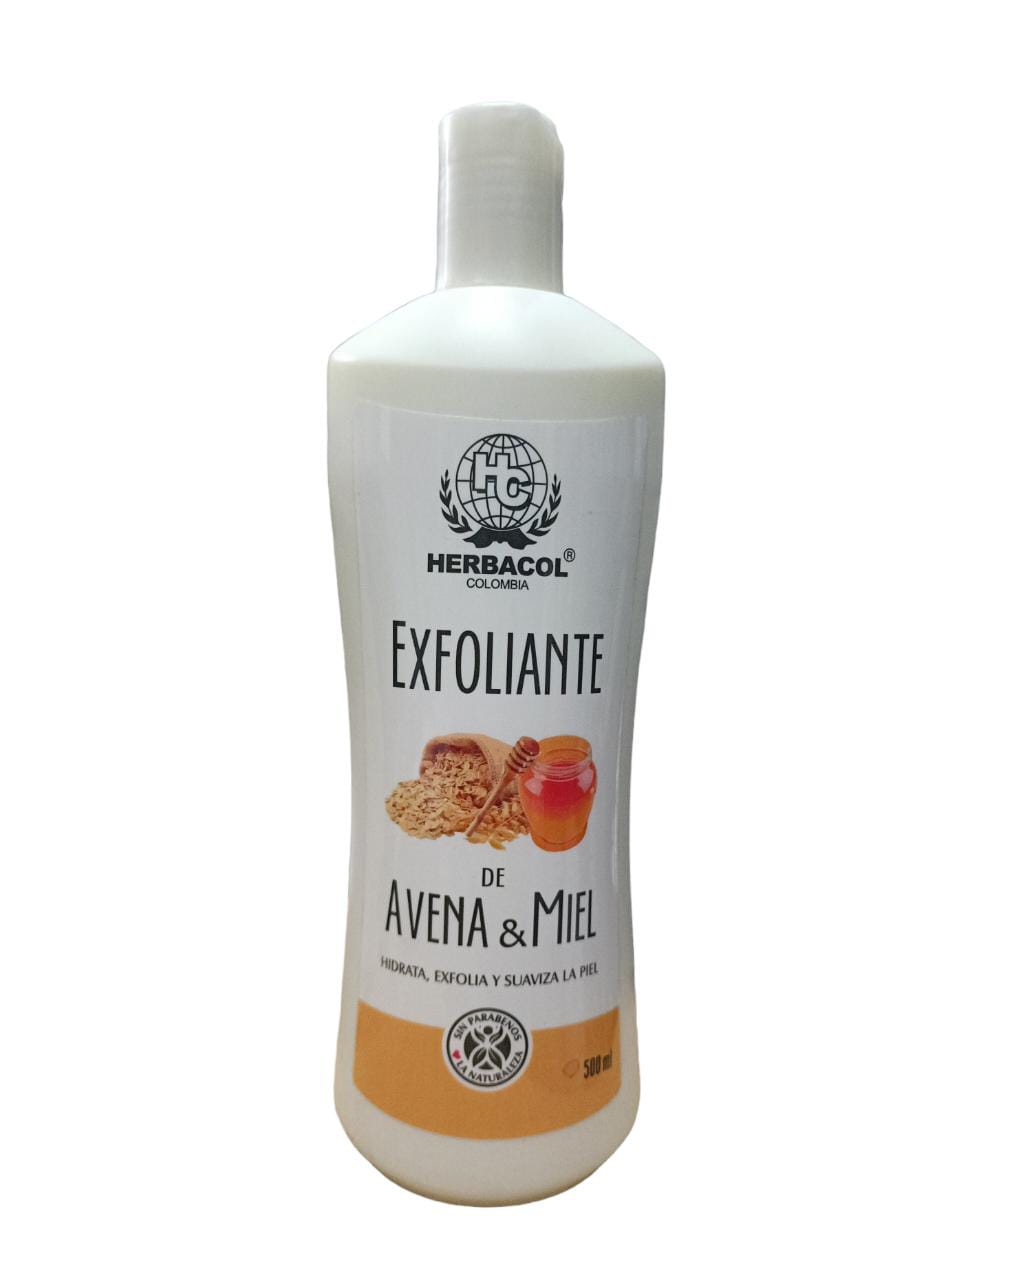 Exfoliante de Avena & miel 500ml